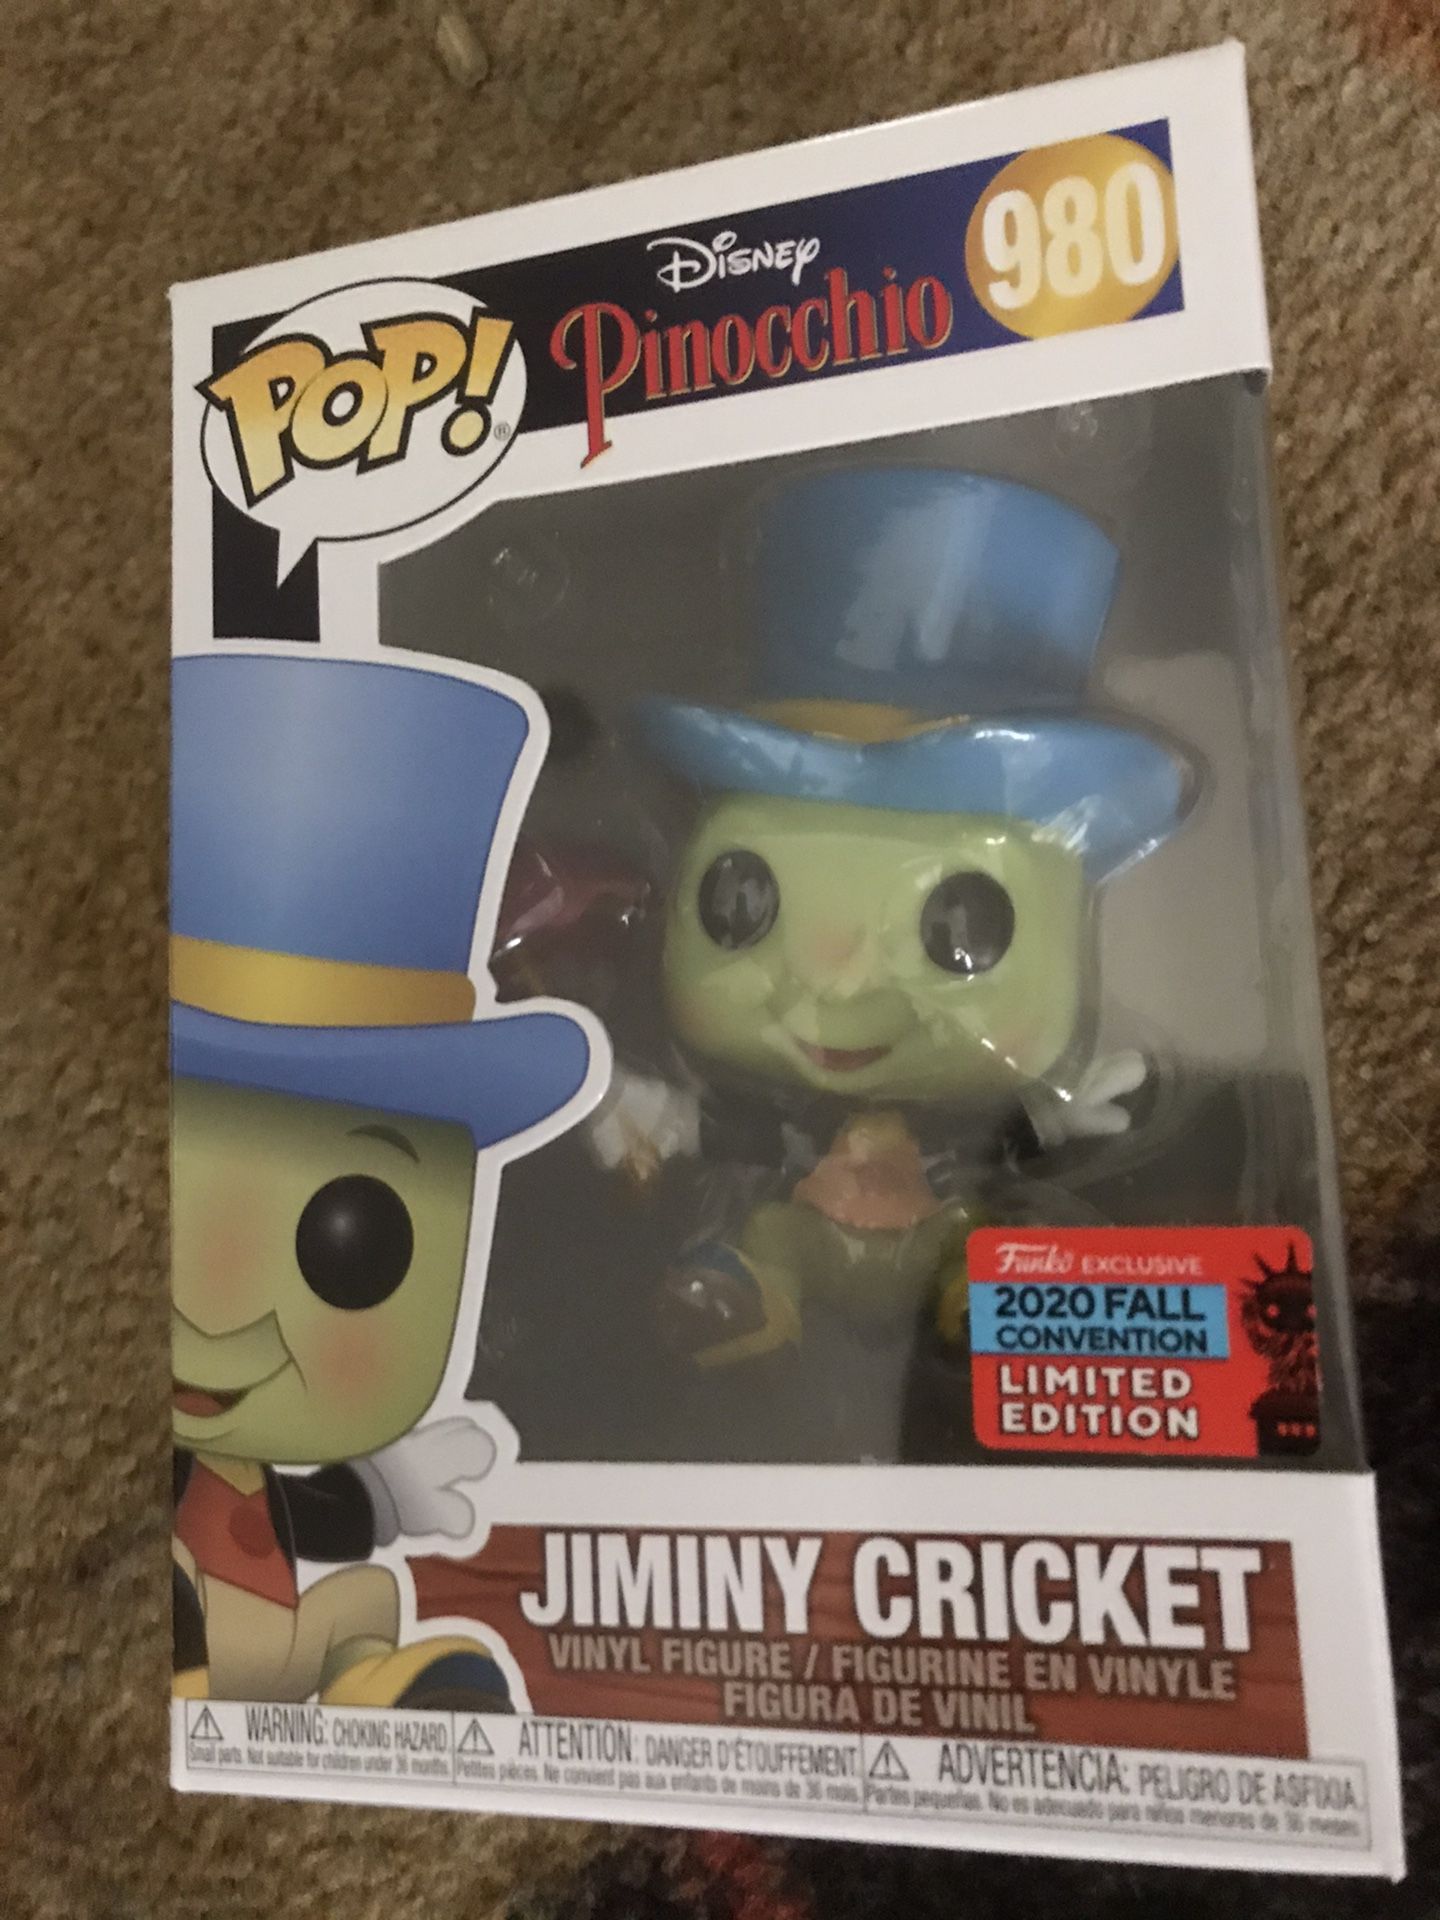 Funko pop convention exclusive Disney Pinocchio jiminy cricket